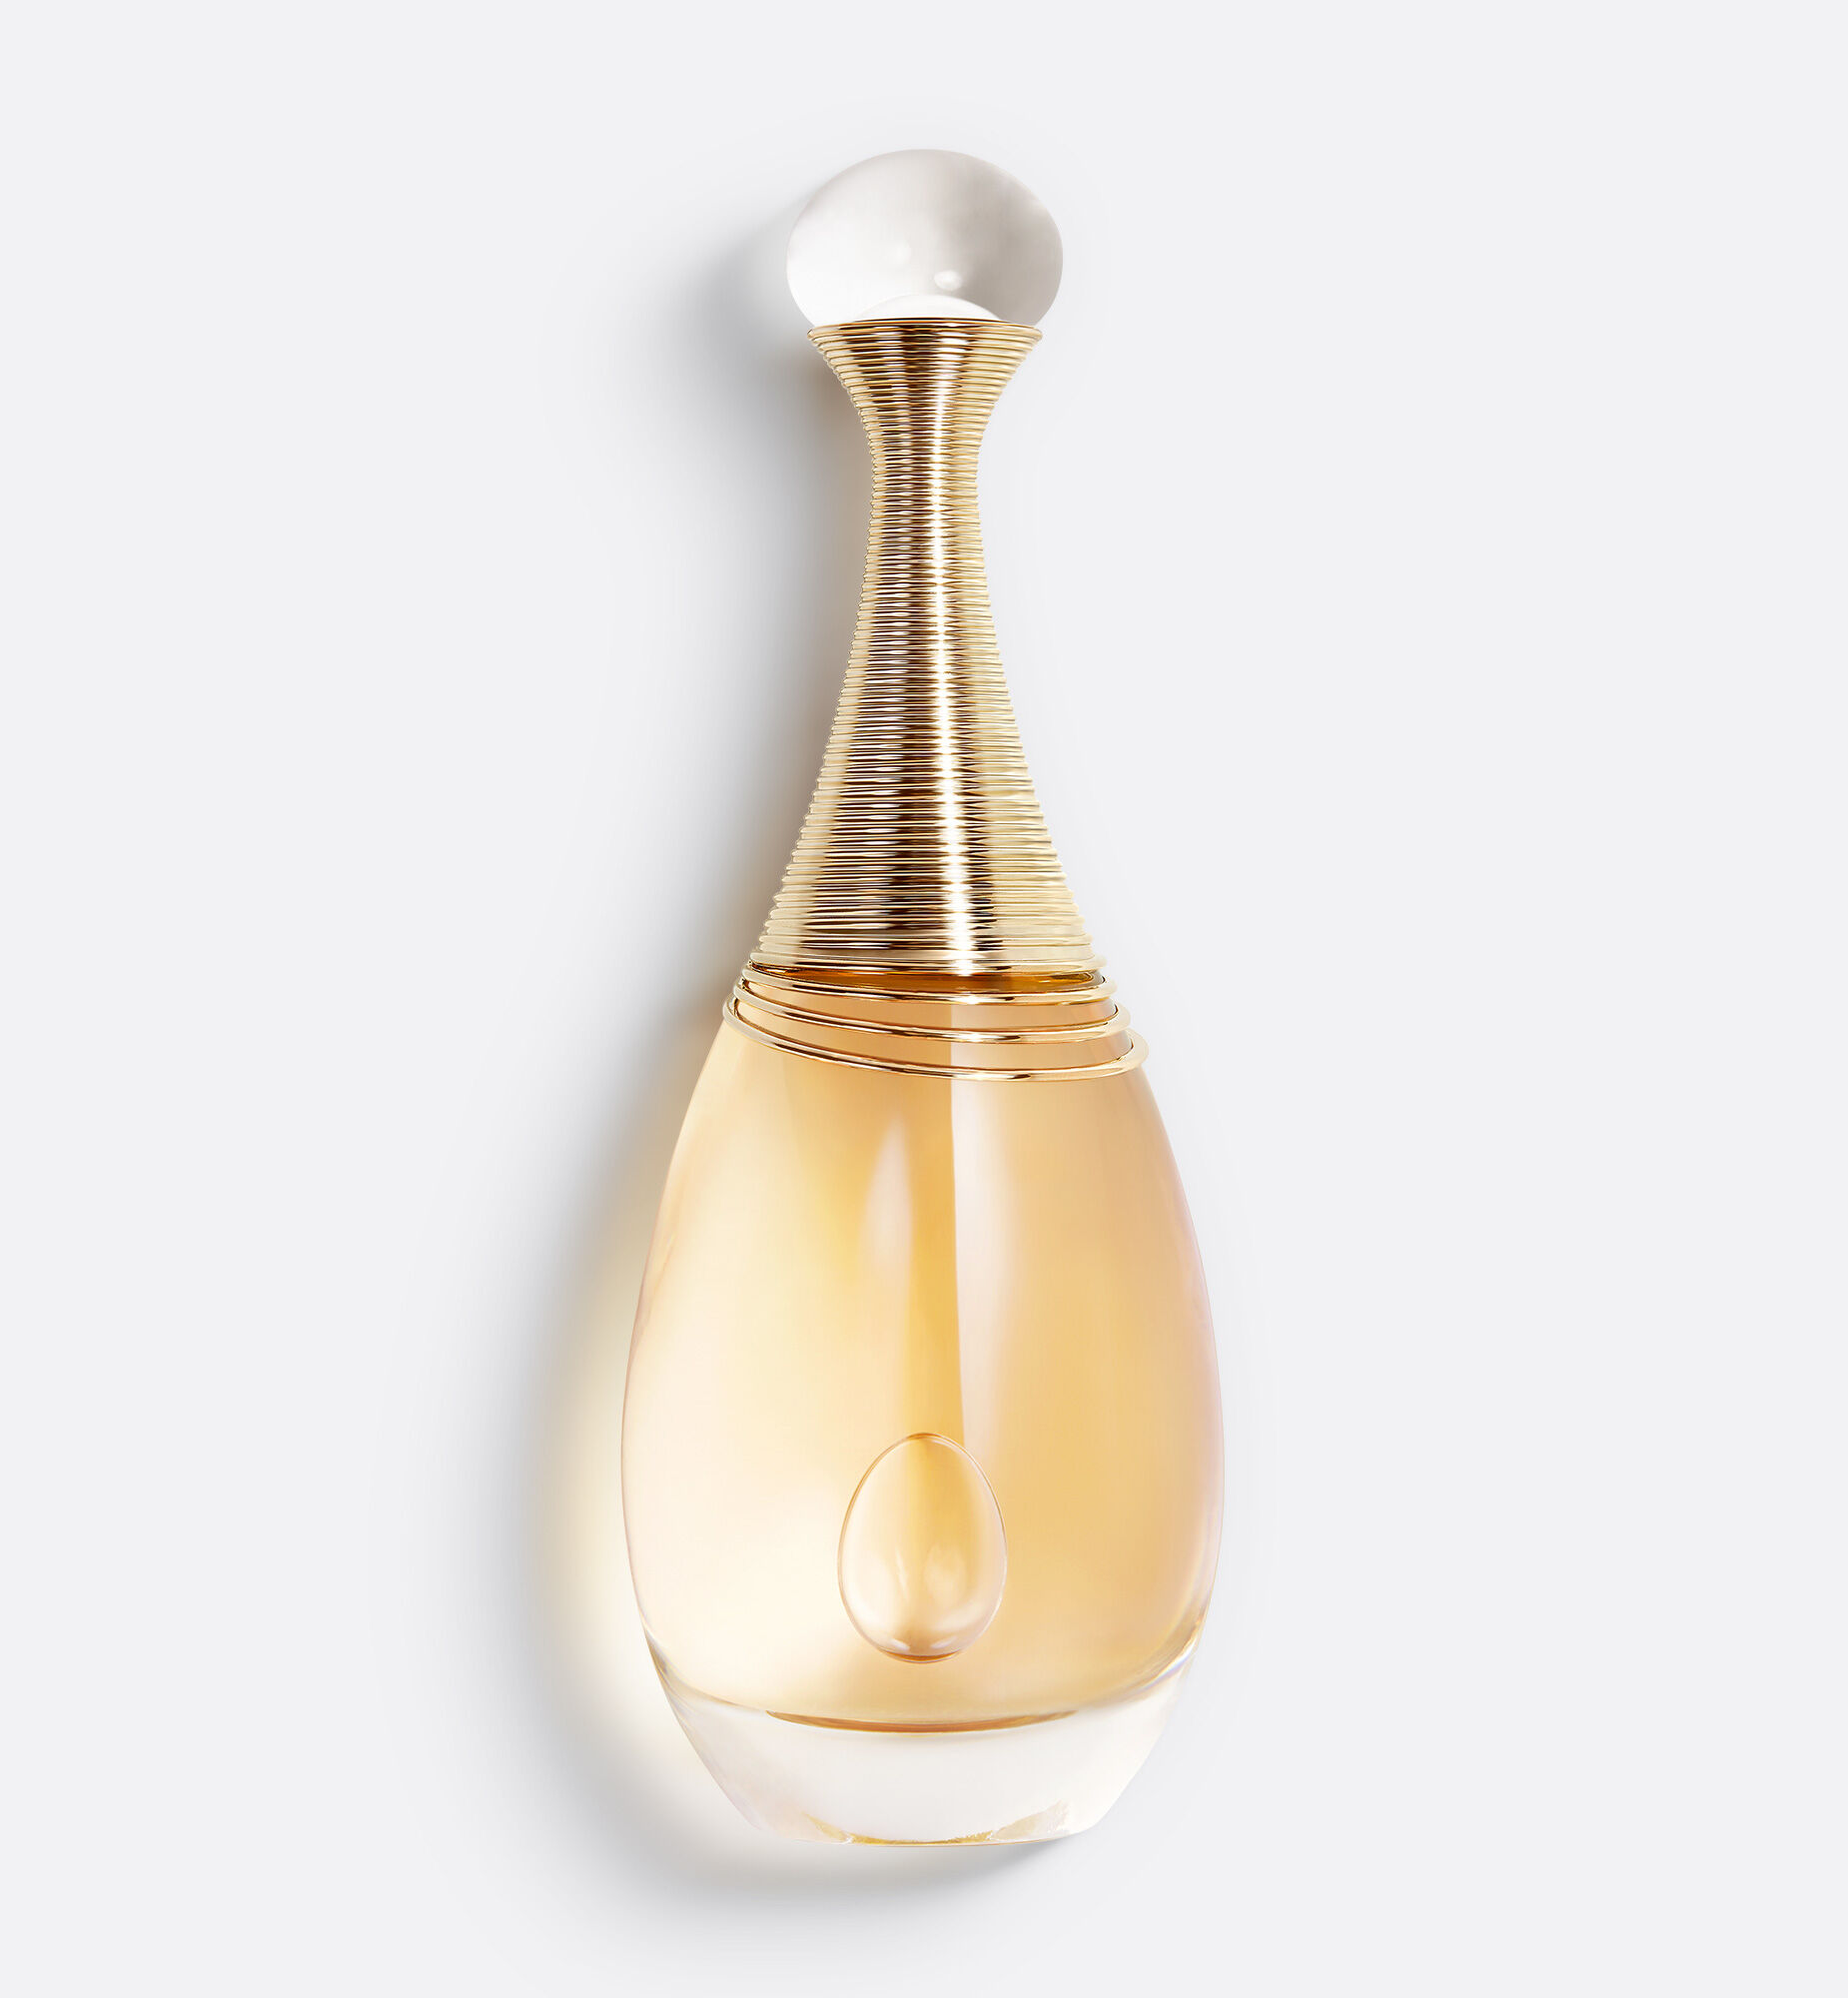 Jamp039adore Dior perfume  a fragrance for women 1999